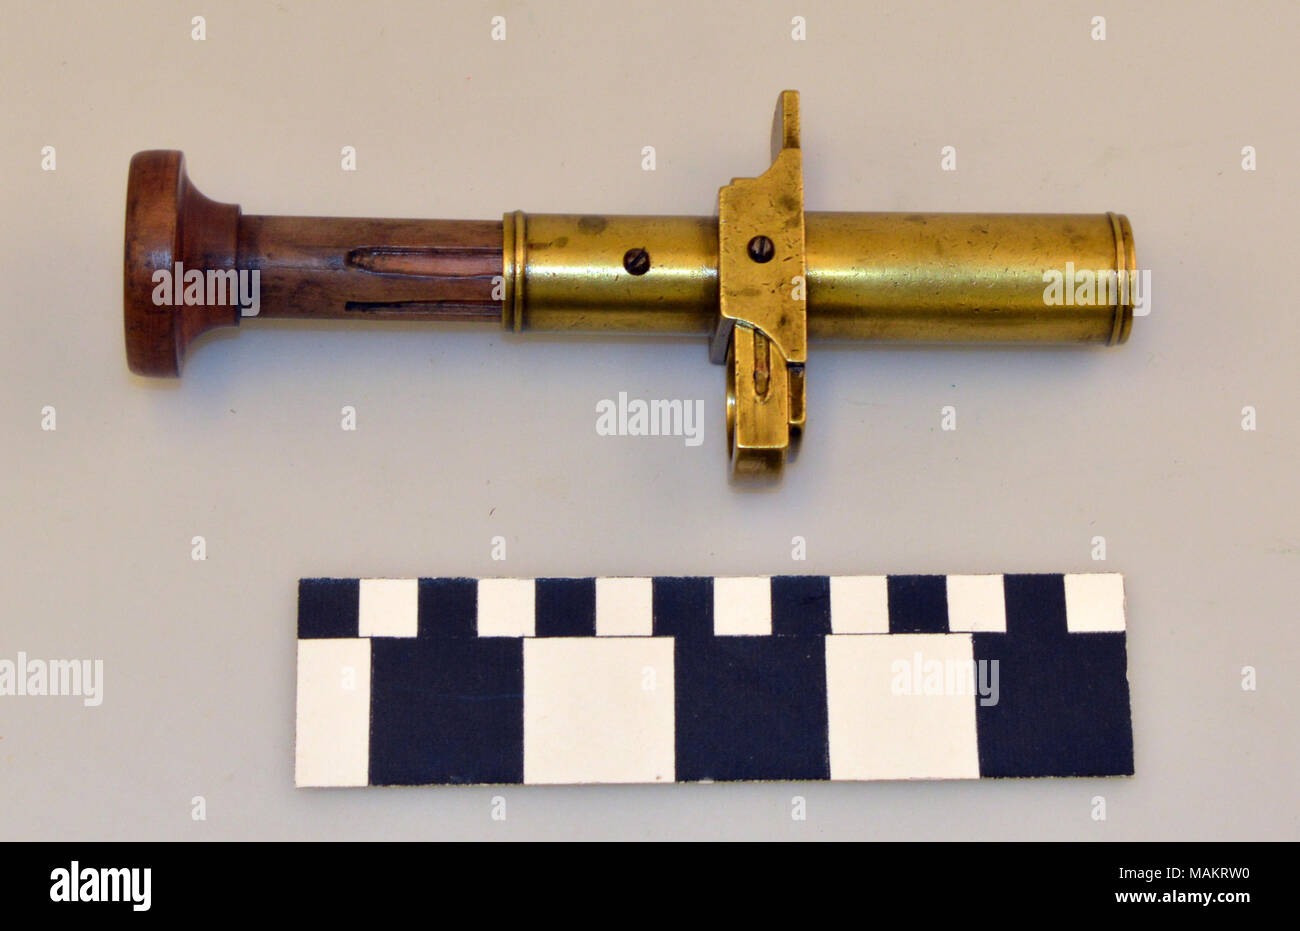 Reloading tool for 10 gauge shotgun shells consists of a brass